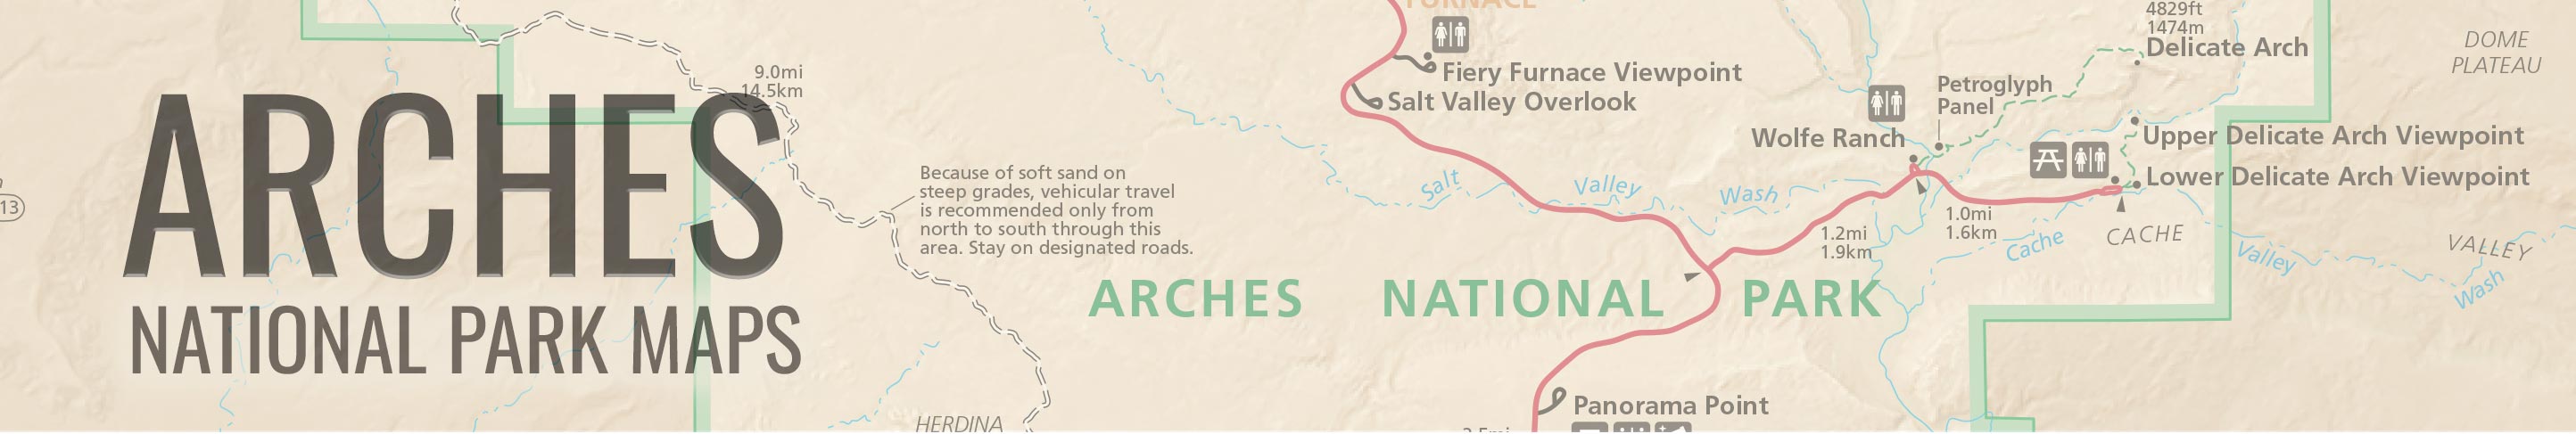 arches-national-park-maps-header